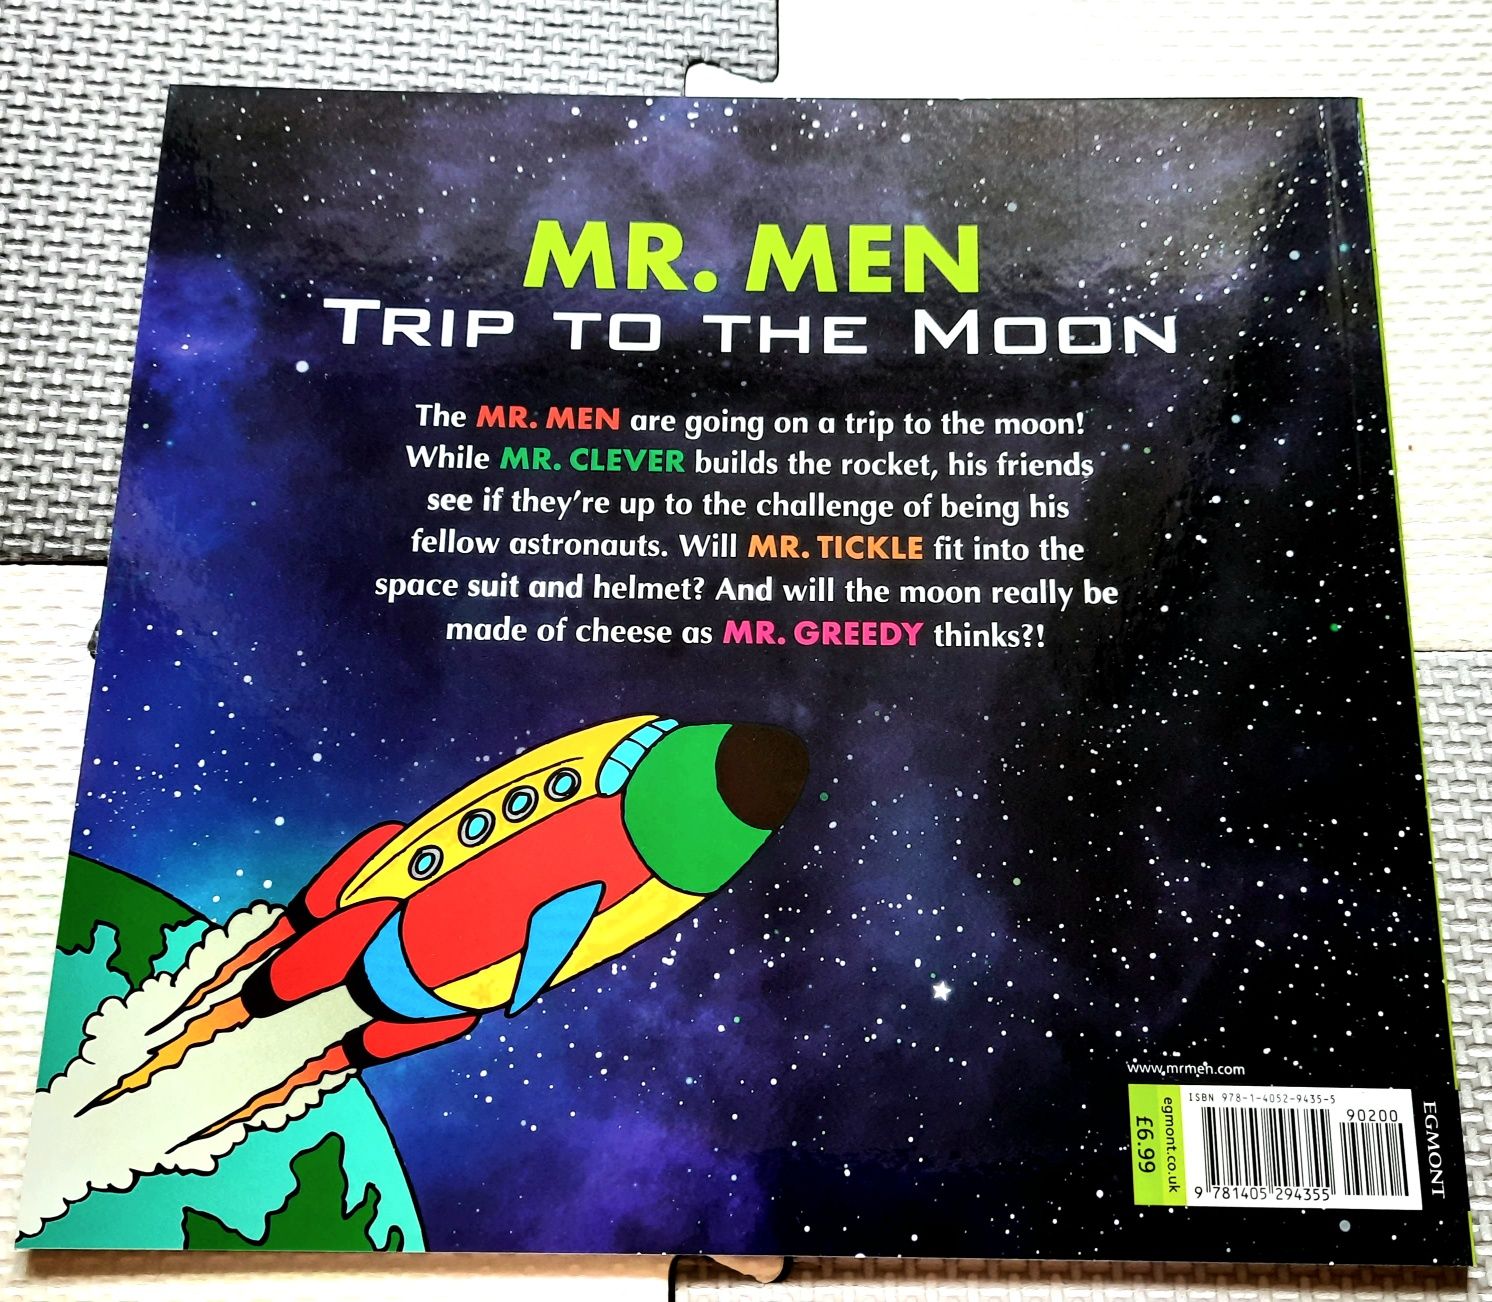 Mr. Men Roger Hargreaves Trip to the Moon książeczka po angielsku